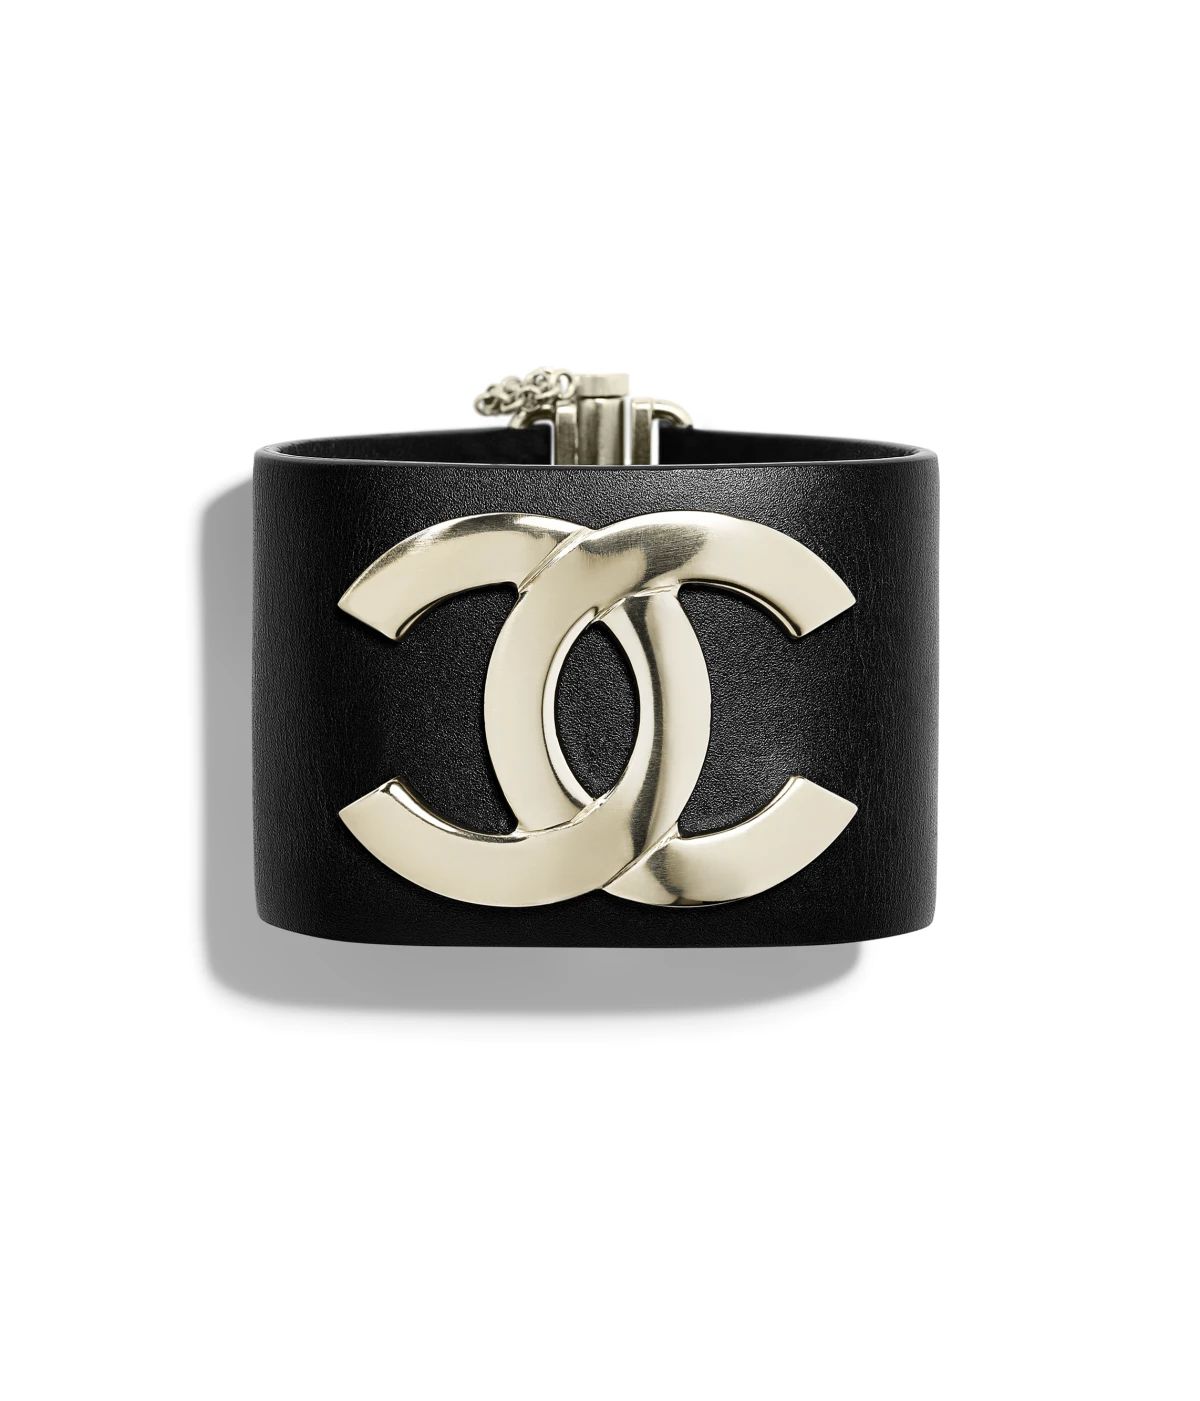 Cuff, metal & calfskin, gold & black - CHANEL | Chanel, Inc. (US)